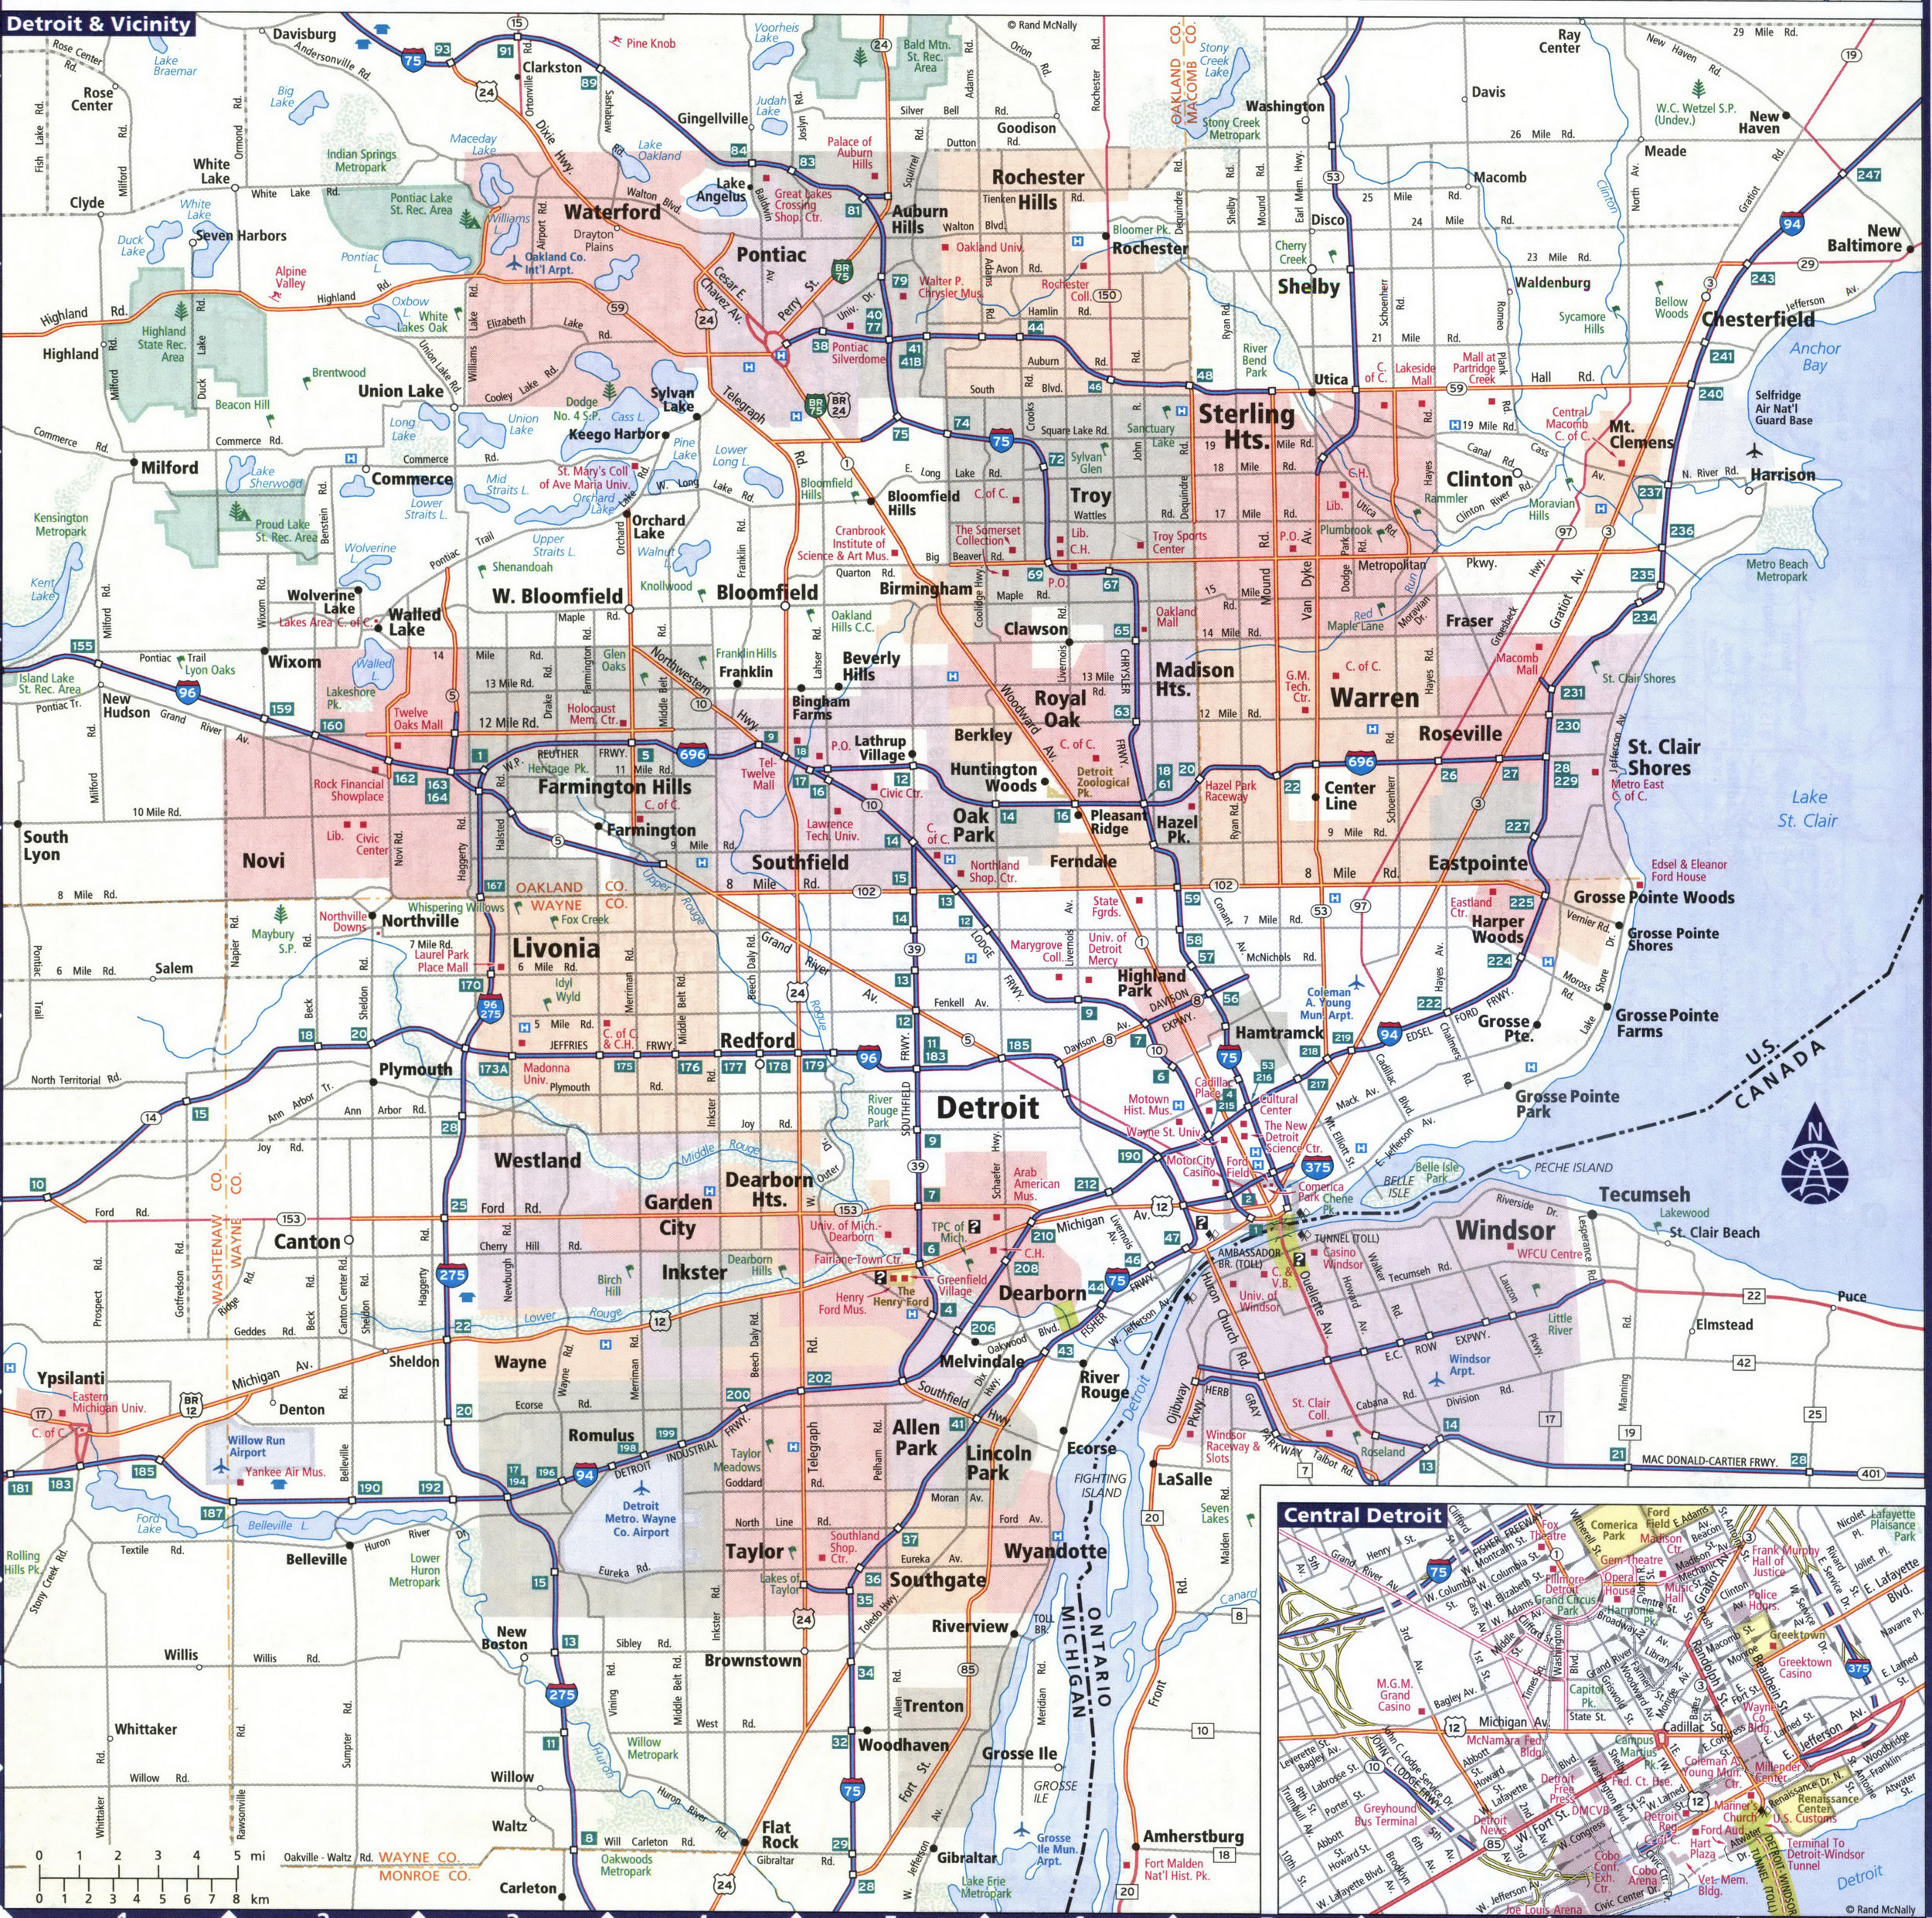 Map of Detroit